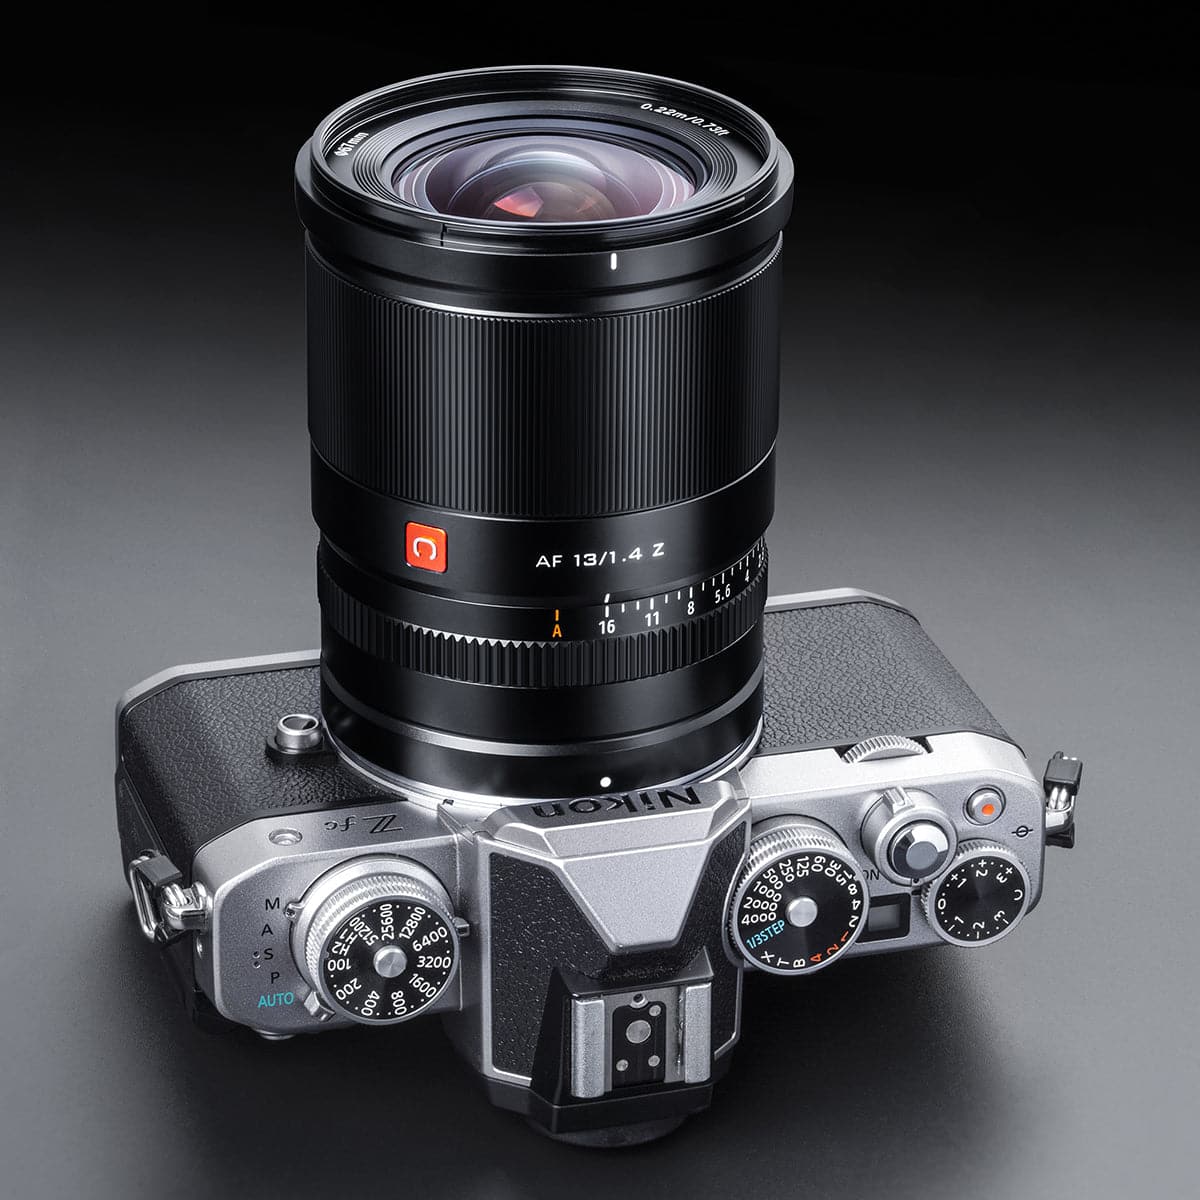 VILTROX 13mm F1.4 Z-mount Auto Focus APS-C Prime Lens with Stepless Aperture for Nikon Z-mount Mirrorless Cameras